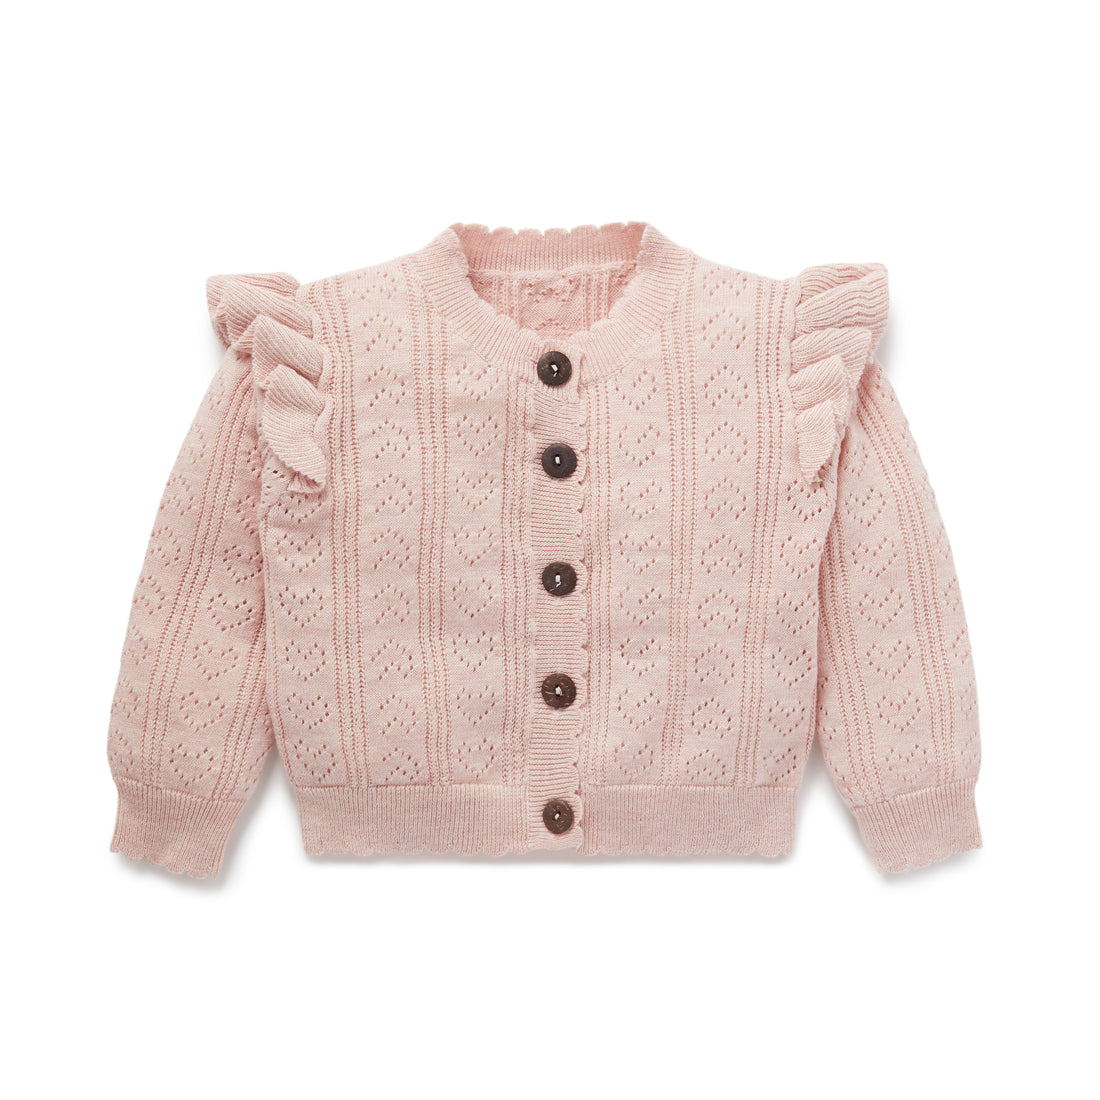 【LAST TWO】Aster & Oak - Pink Ruffle Knit Cardigan